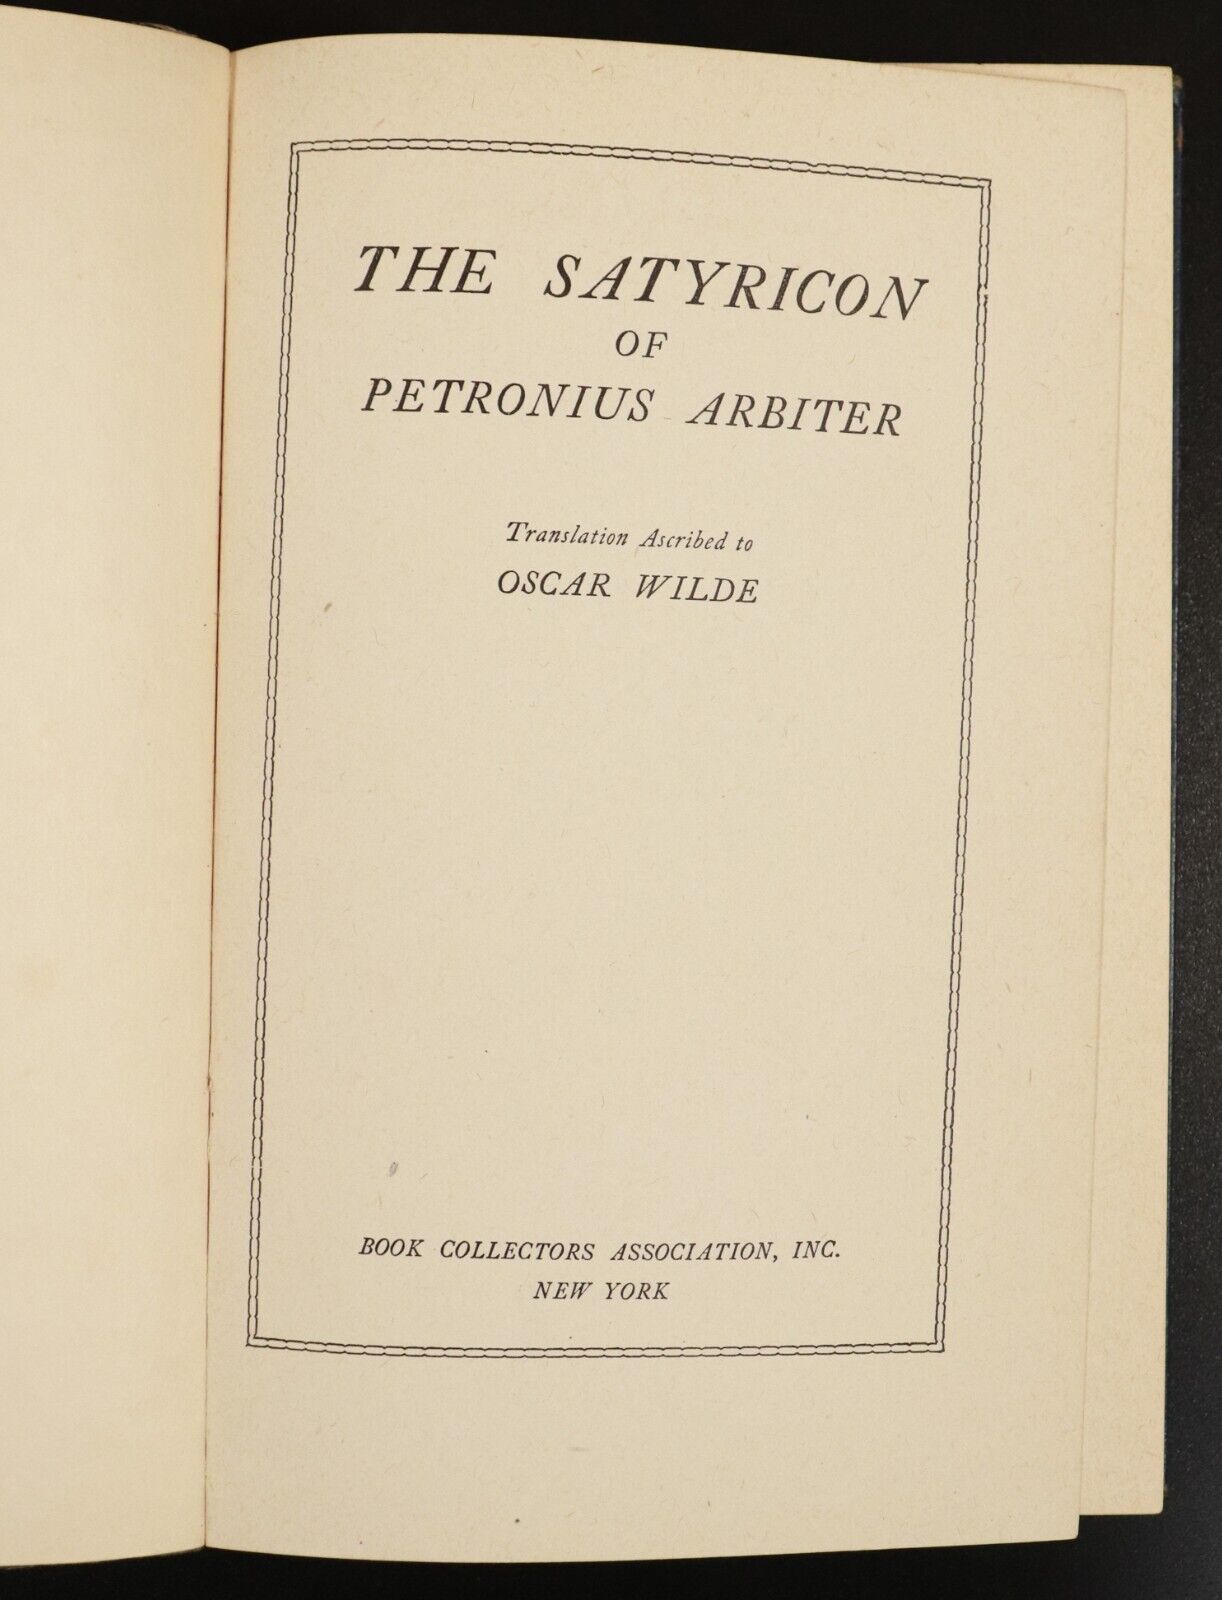 1934 The Satyricon Of Petronius Arbiter - Oscar Wilde Antique Roman History Book - 0